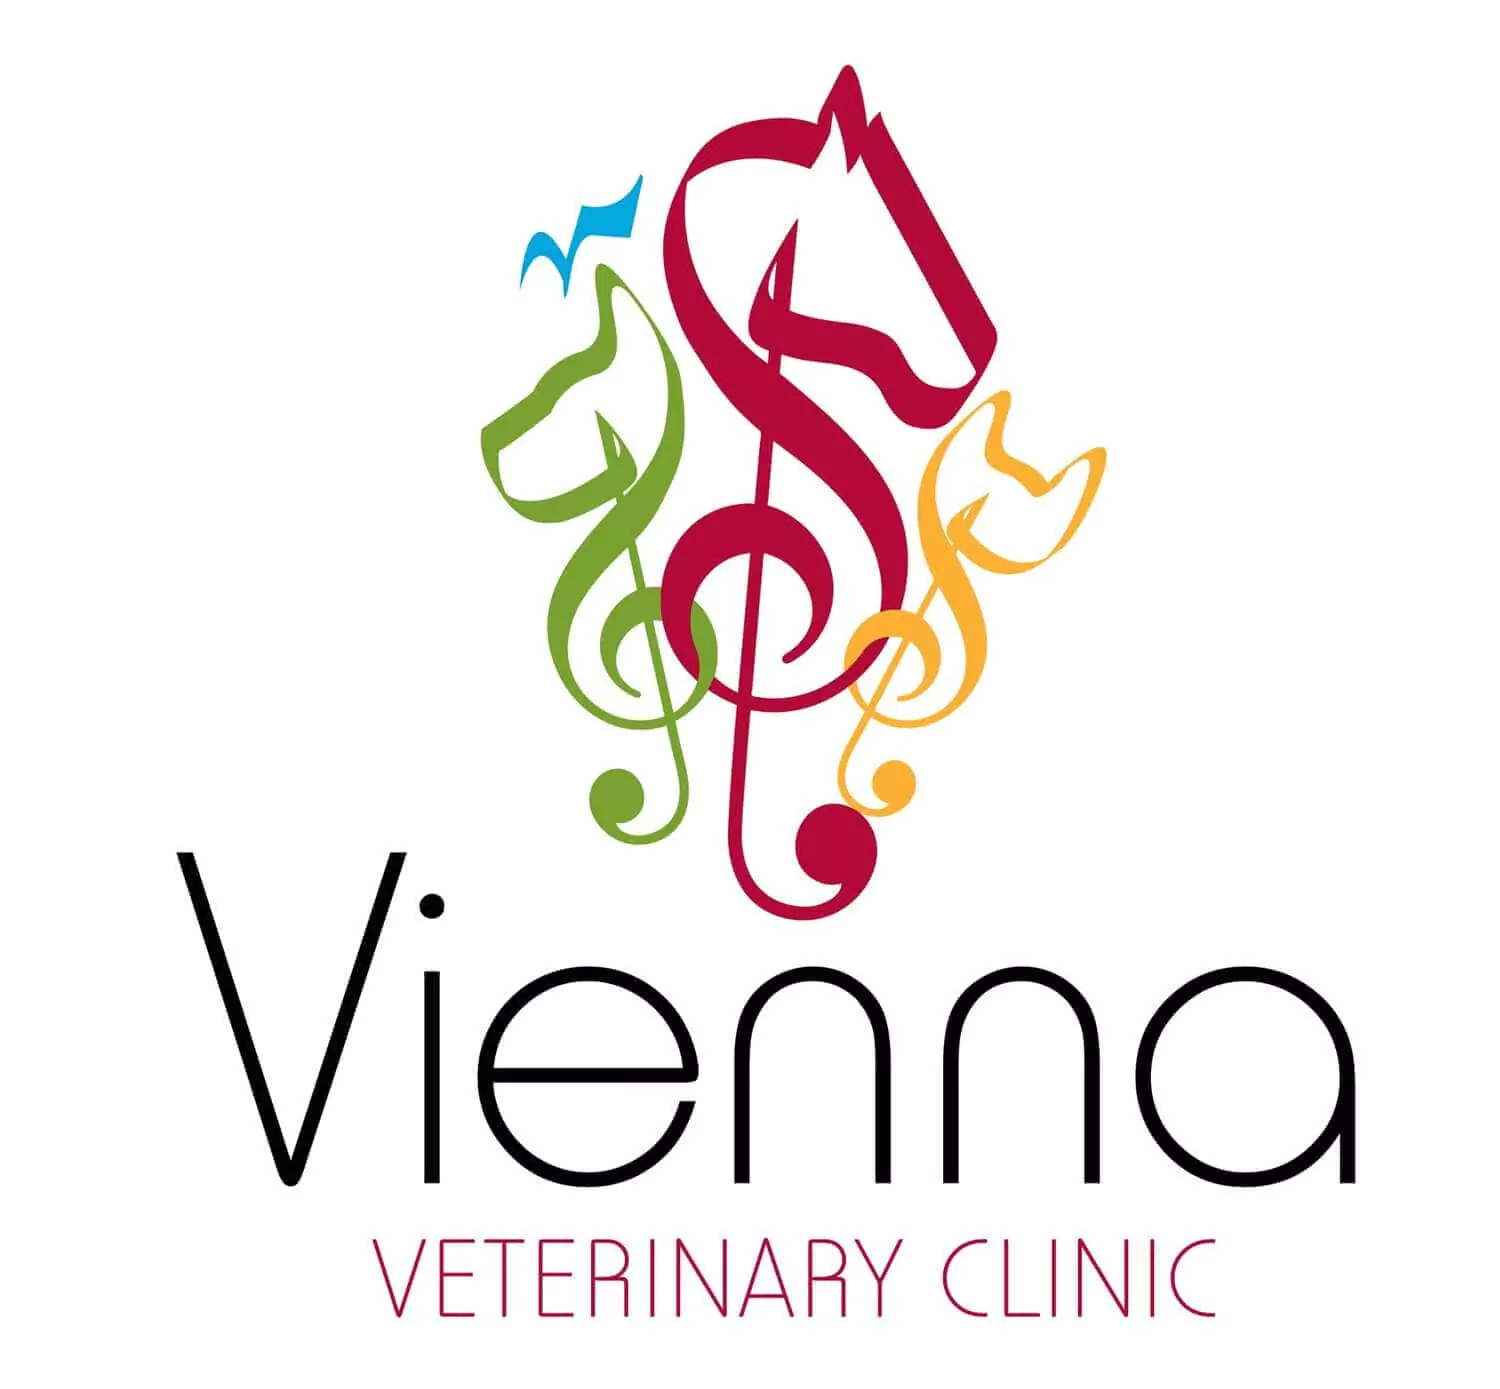 Vienna Veterinary Clinic